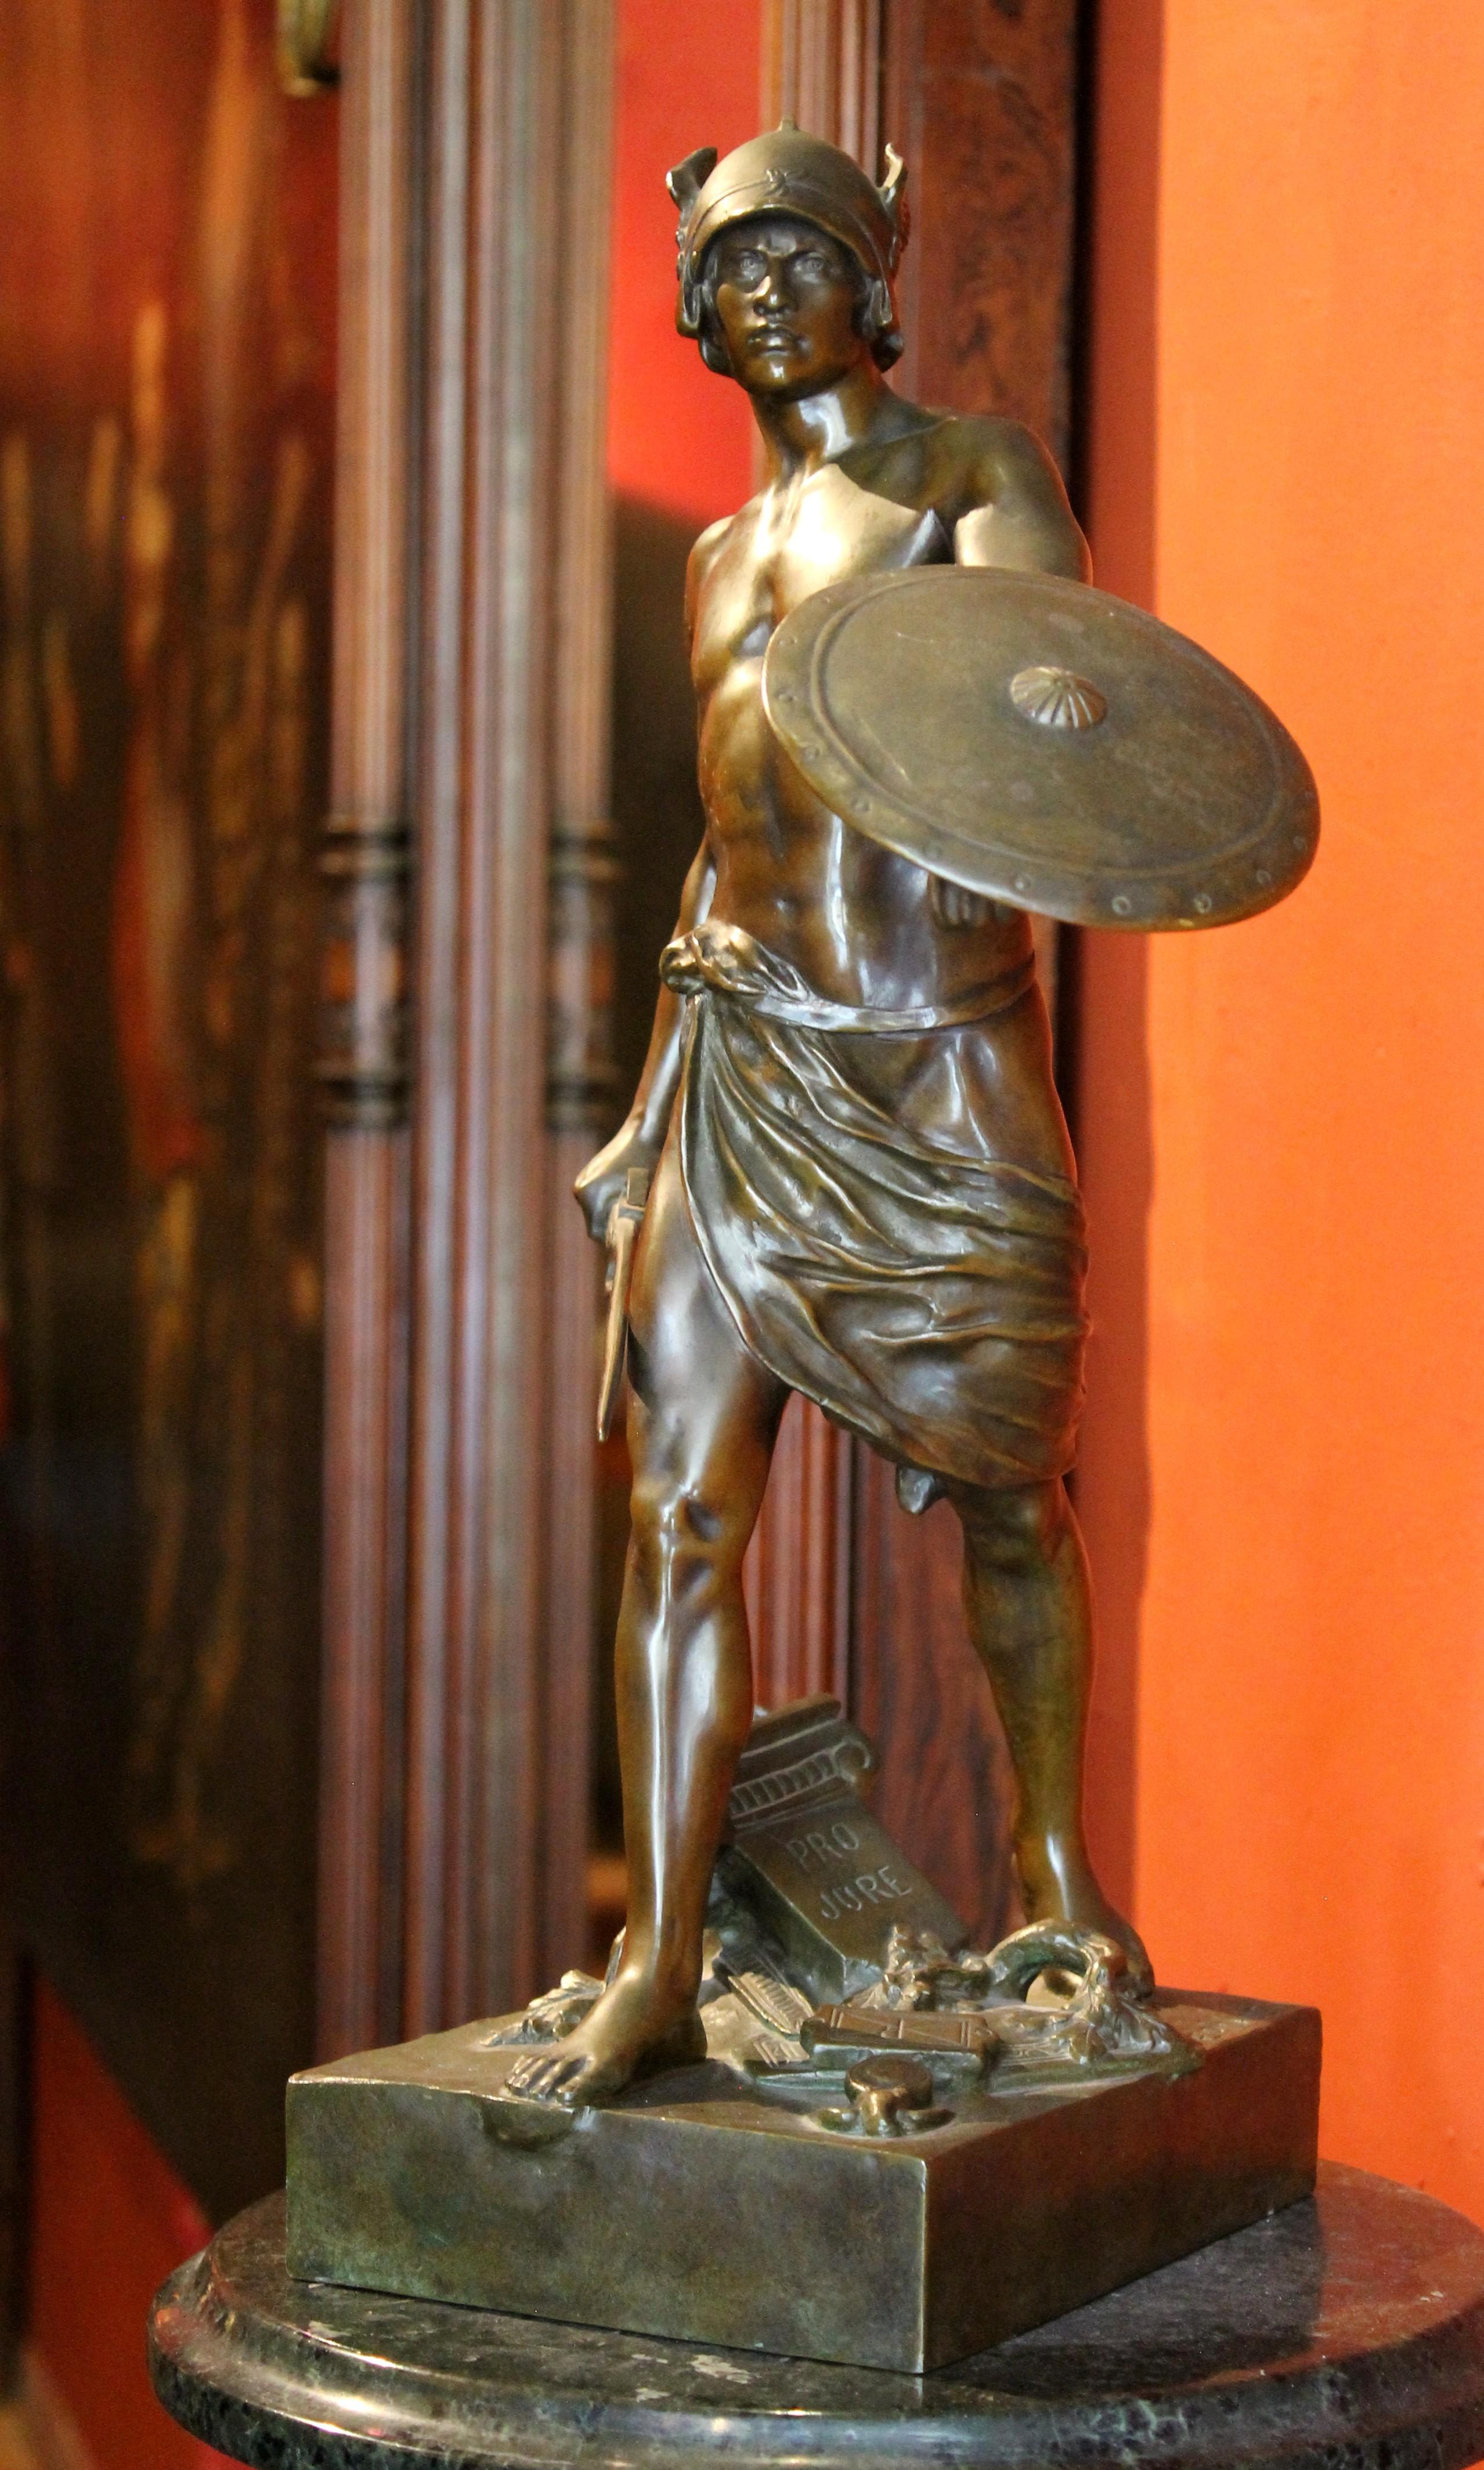 Antique French Burnished Bronze figurative Sculpture of a Gallic Warrior - Gold Figurative Sculpture by Émile Louis Picault